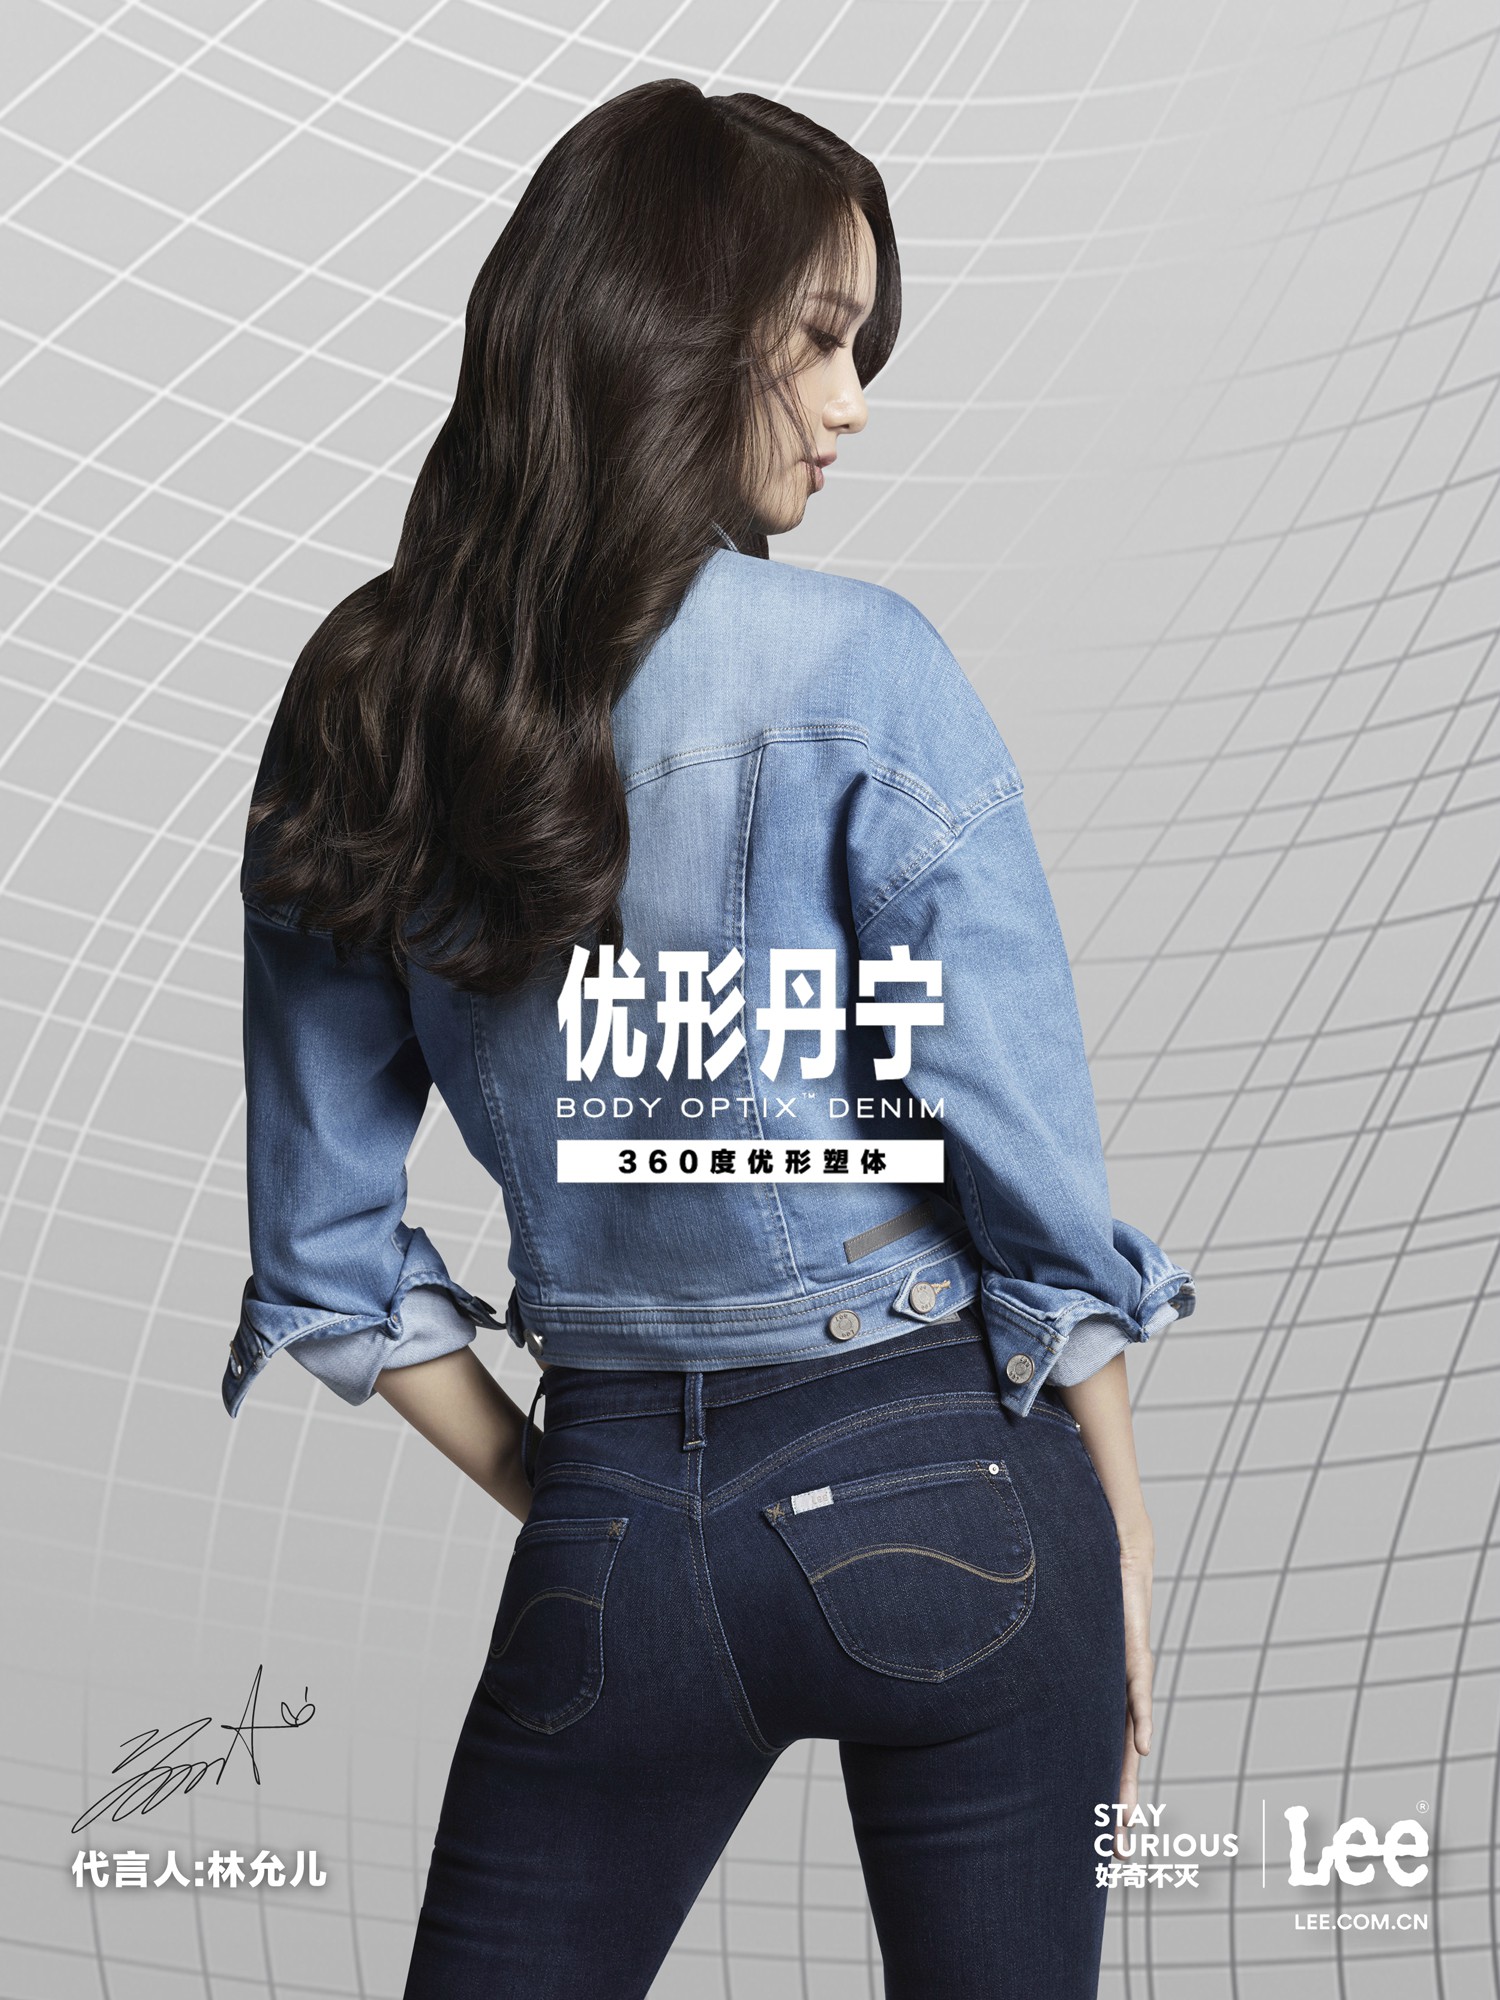 YoonA 4 [1500x2000] with chinese logo.jpg